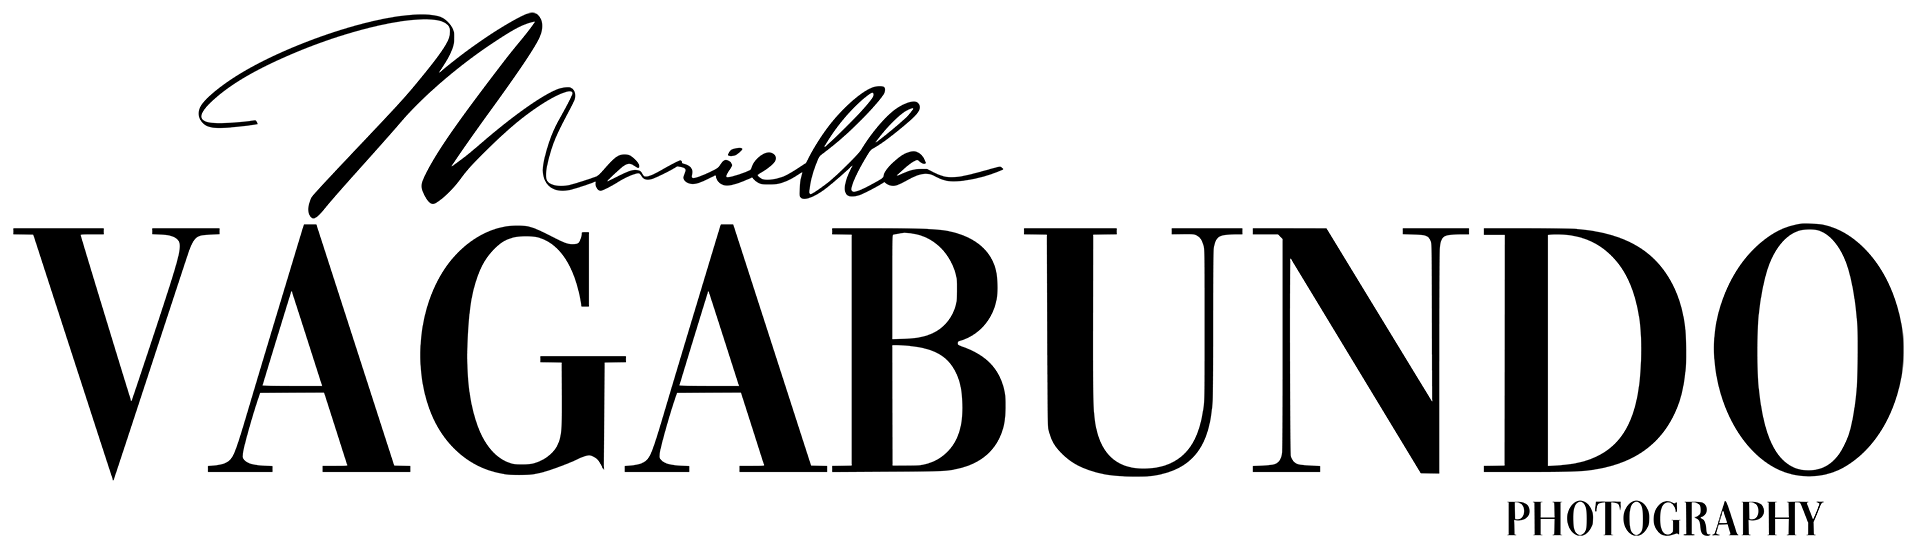 Logo-Mariella-Vagbundo-black-png